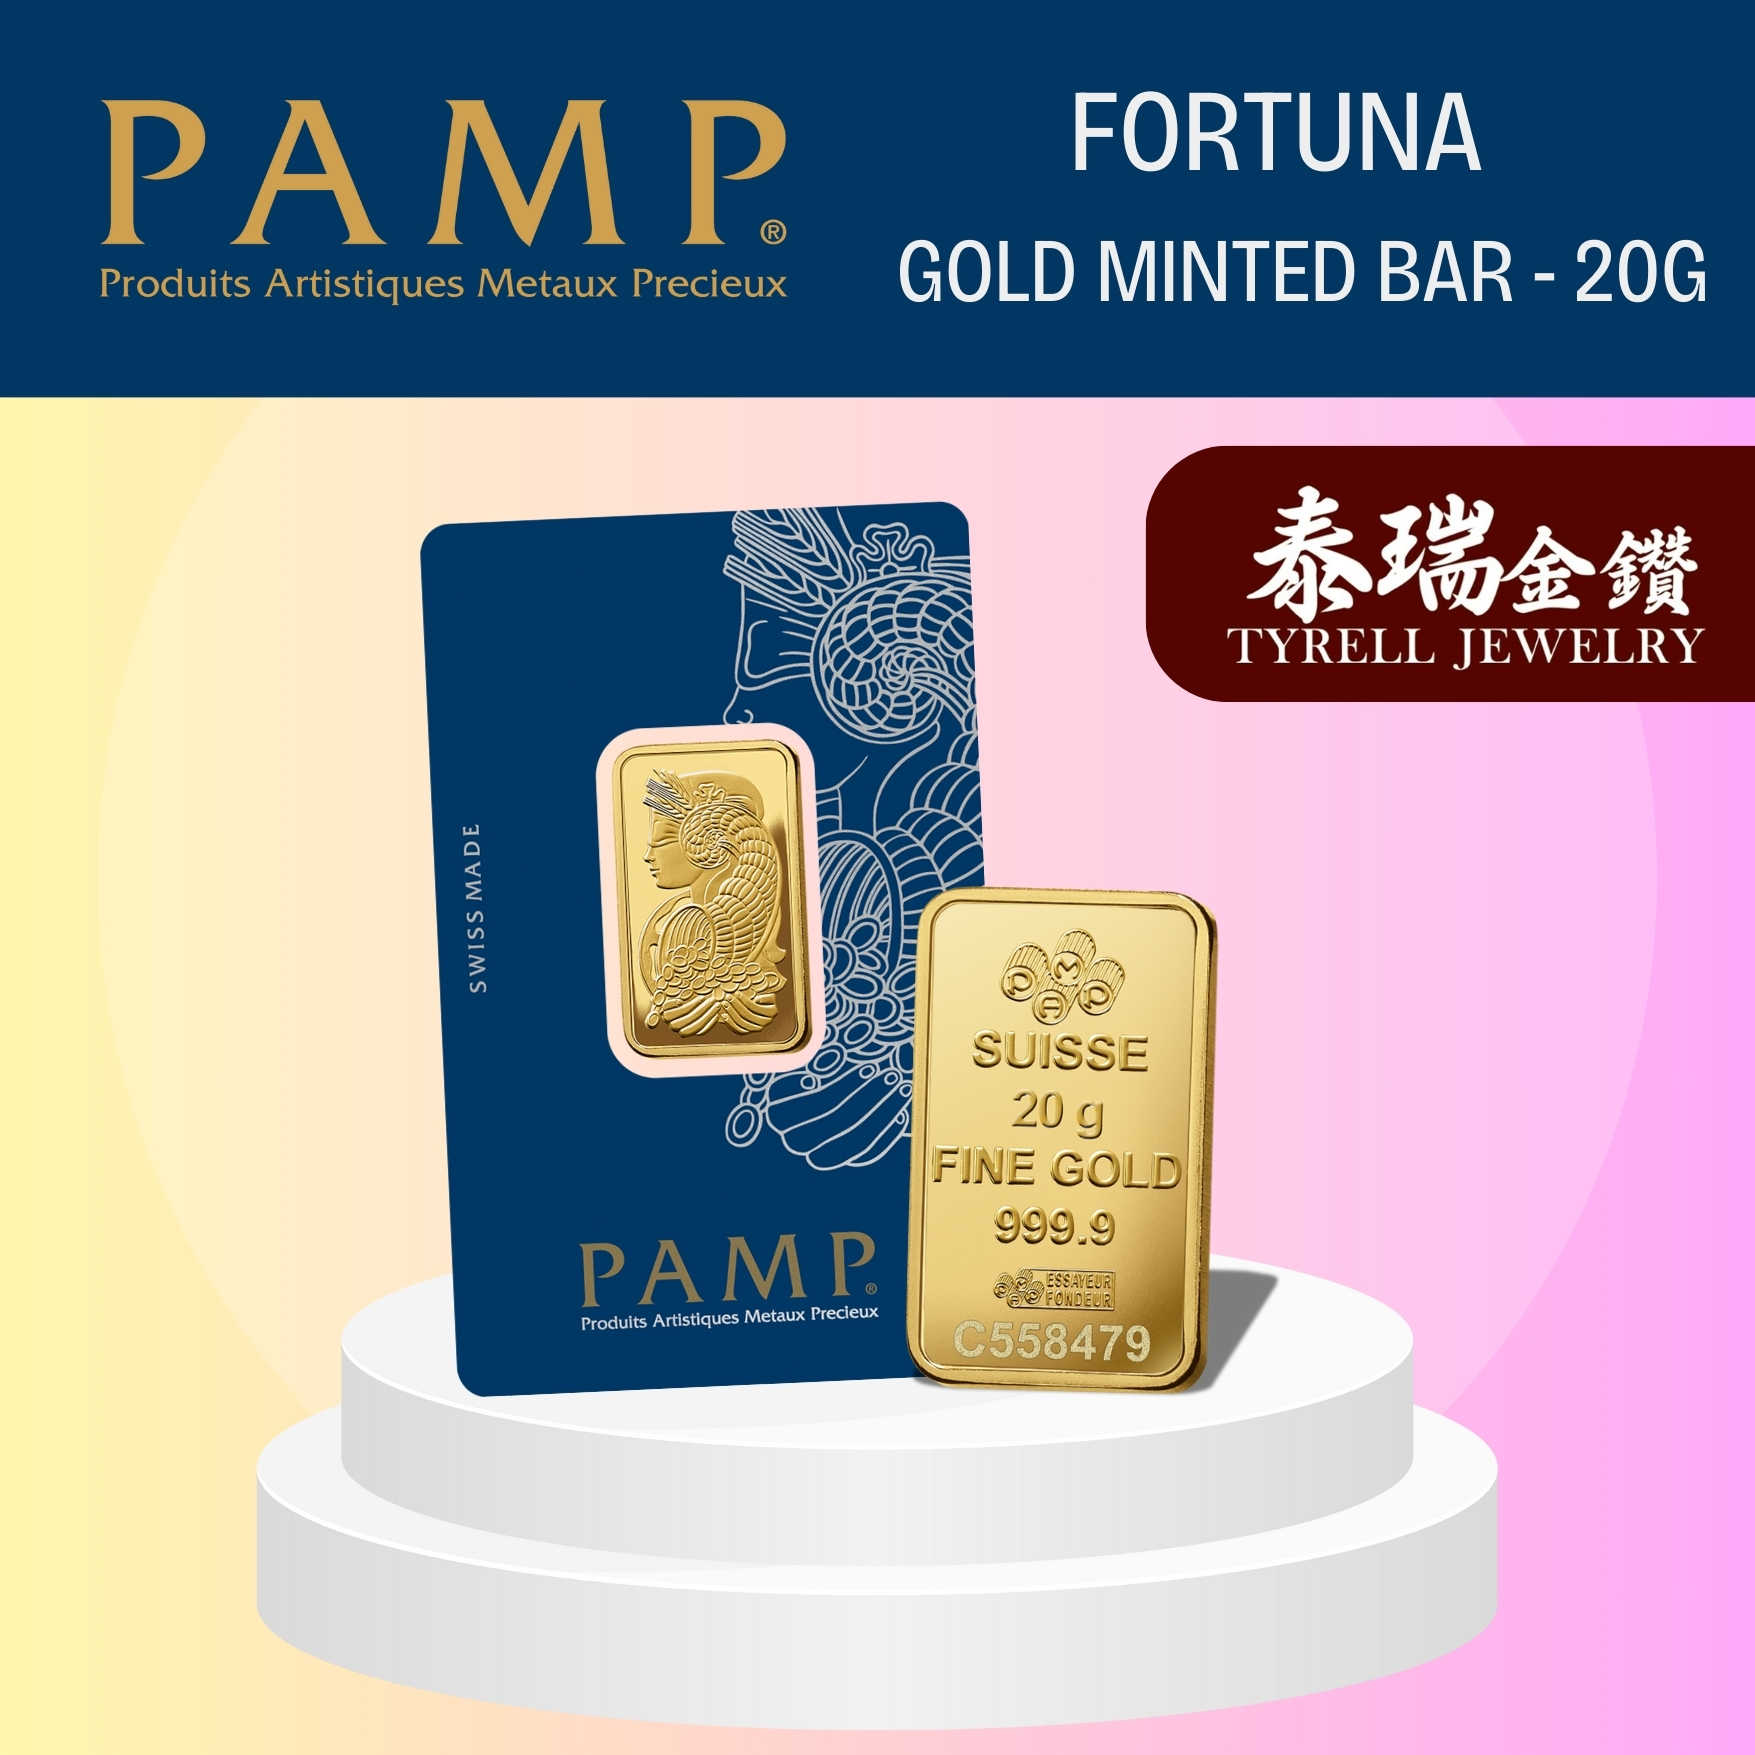 Fortuna Gold Minted Bar - 20g